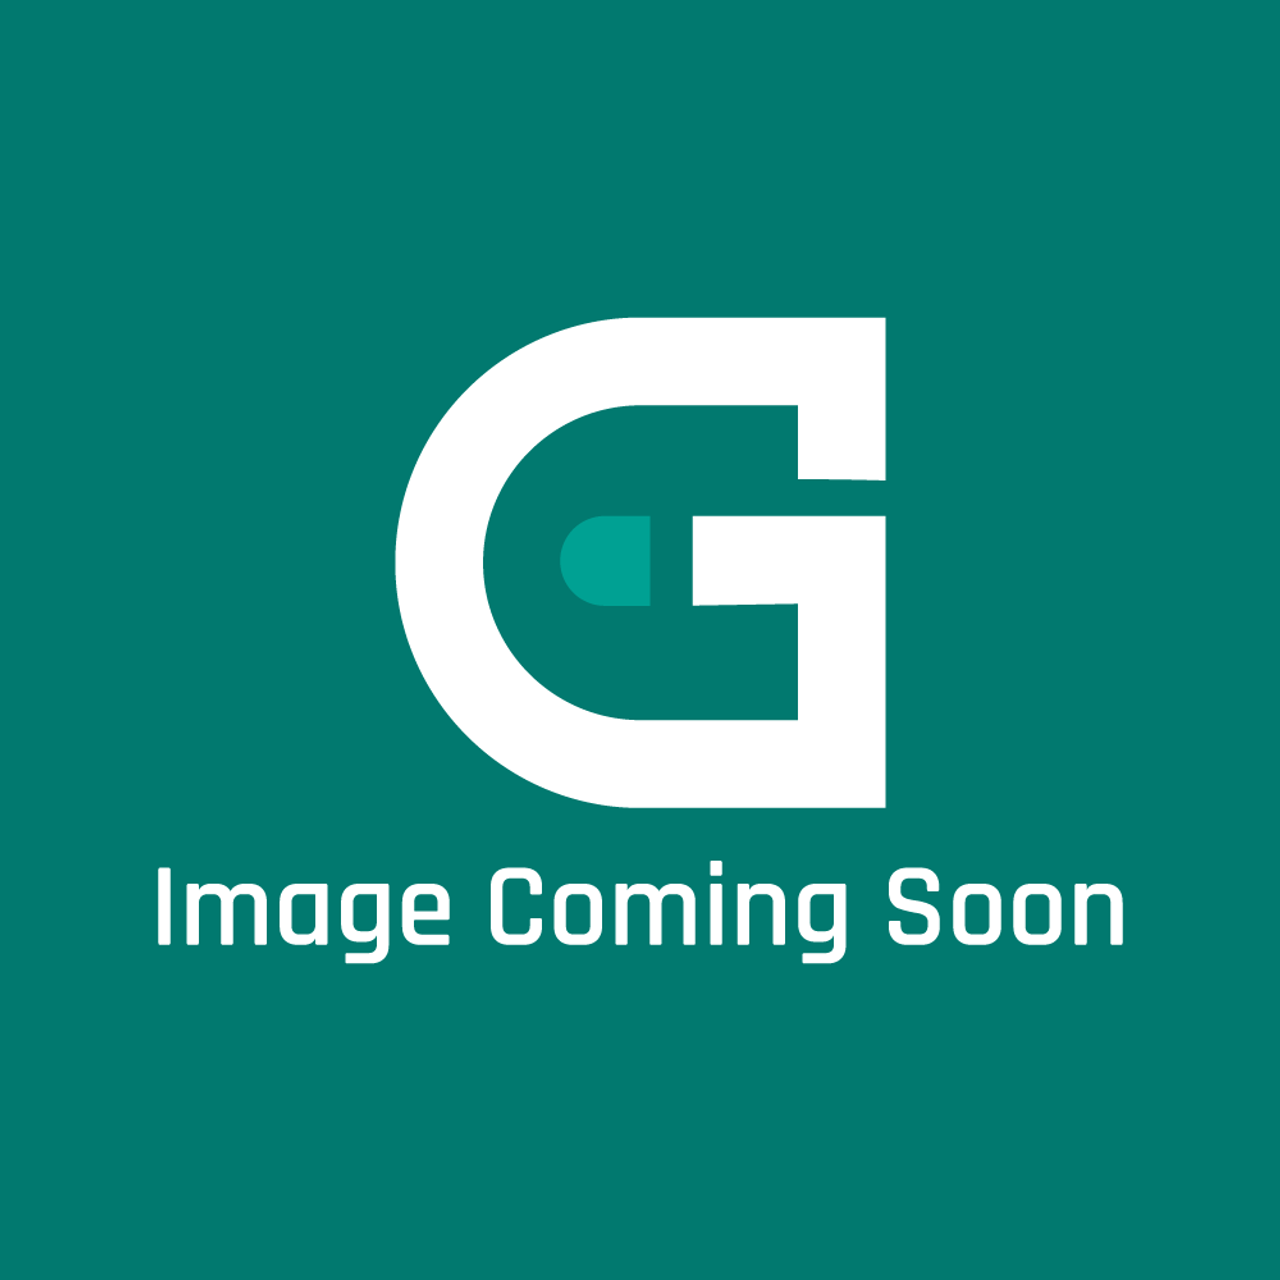 Garland 4525300 - G/U Oven Pilot Shield Rt - Image Coming Soon!